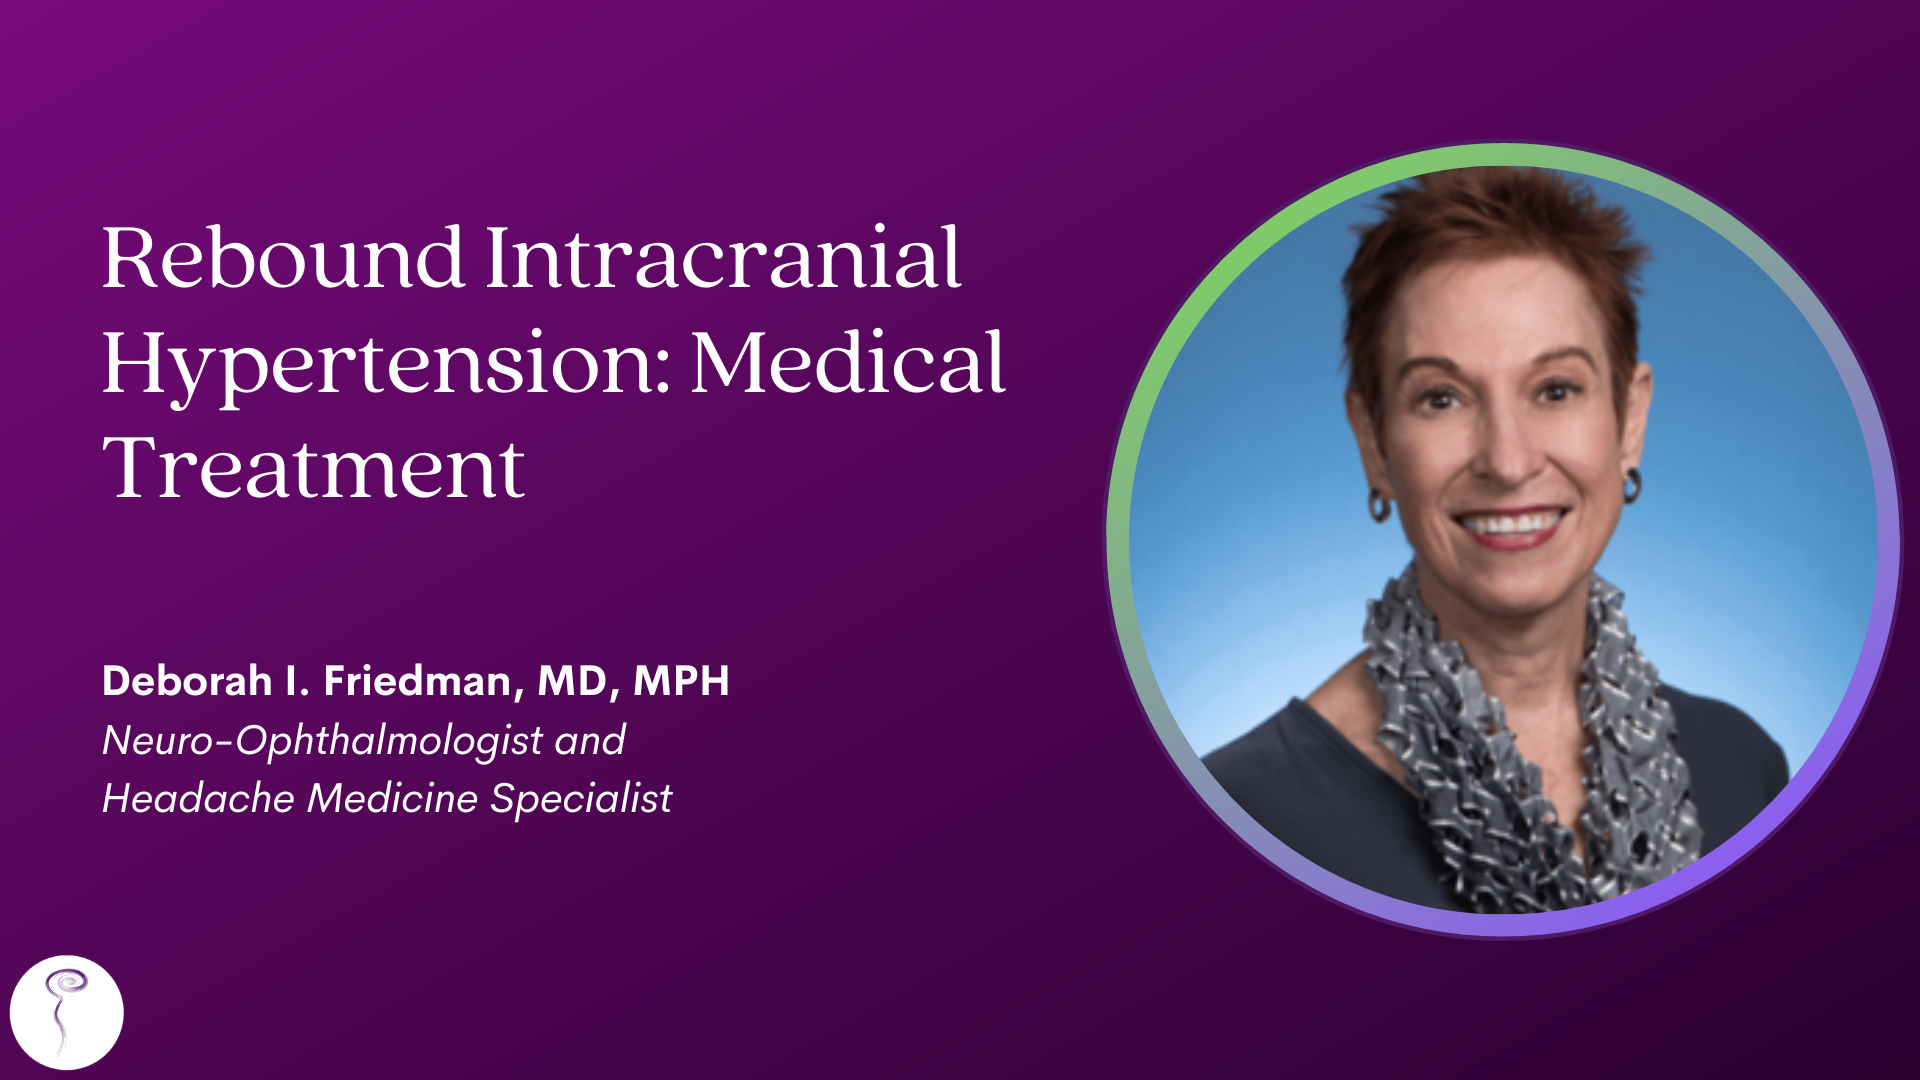 2023 Intracranial Hypotension Conference: Dr. Deborah Friedman on RIH